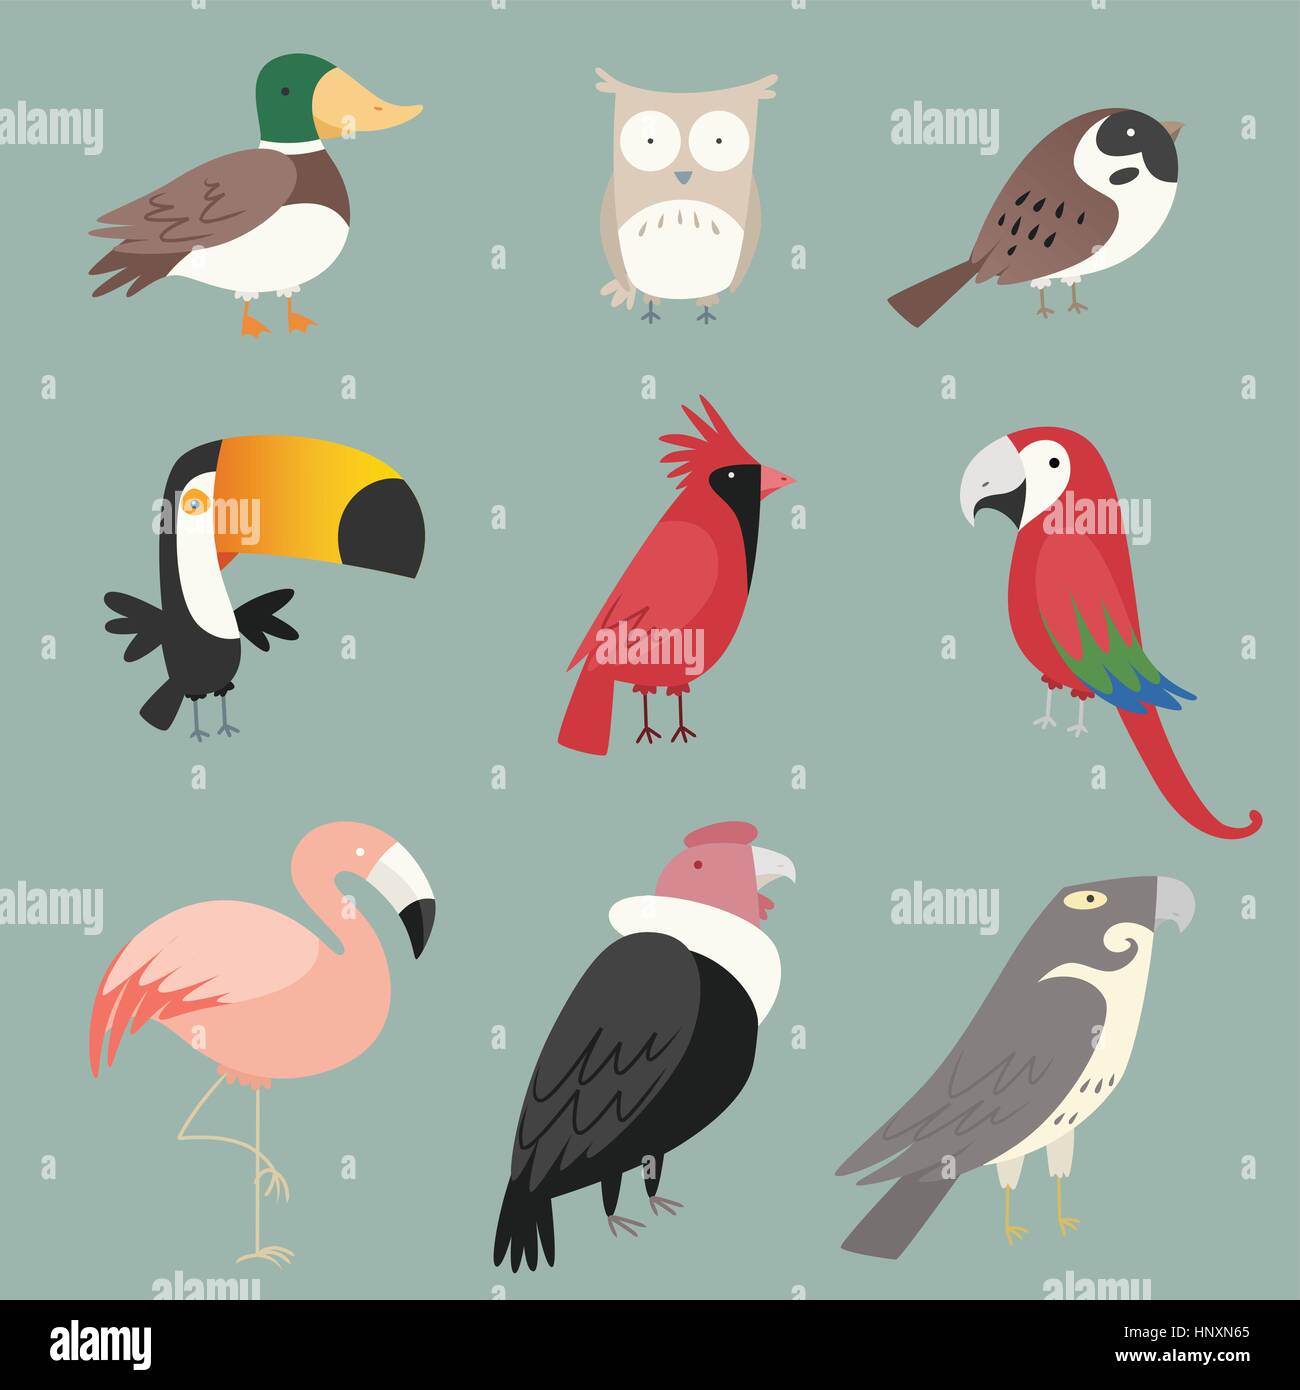 Cartoon species Bird collection. With nine (9) different birds species like: duck, owl, peacock, rooster, pelican, toucan and swan vector illustration Stock Vector